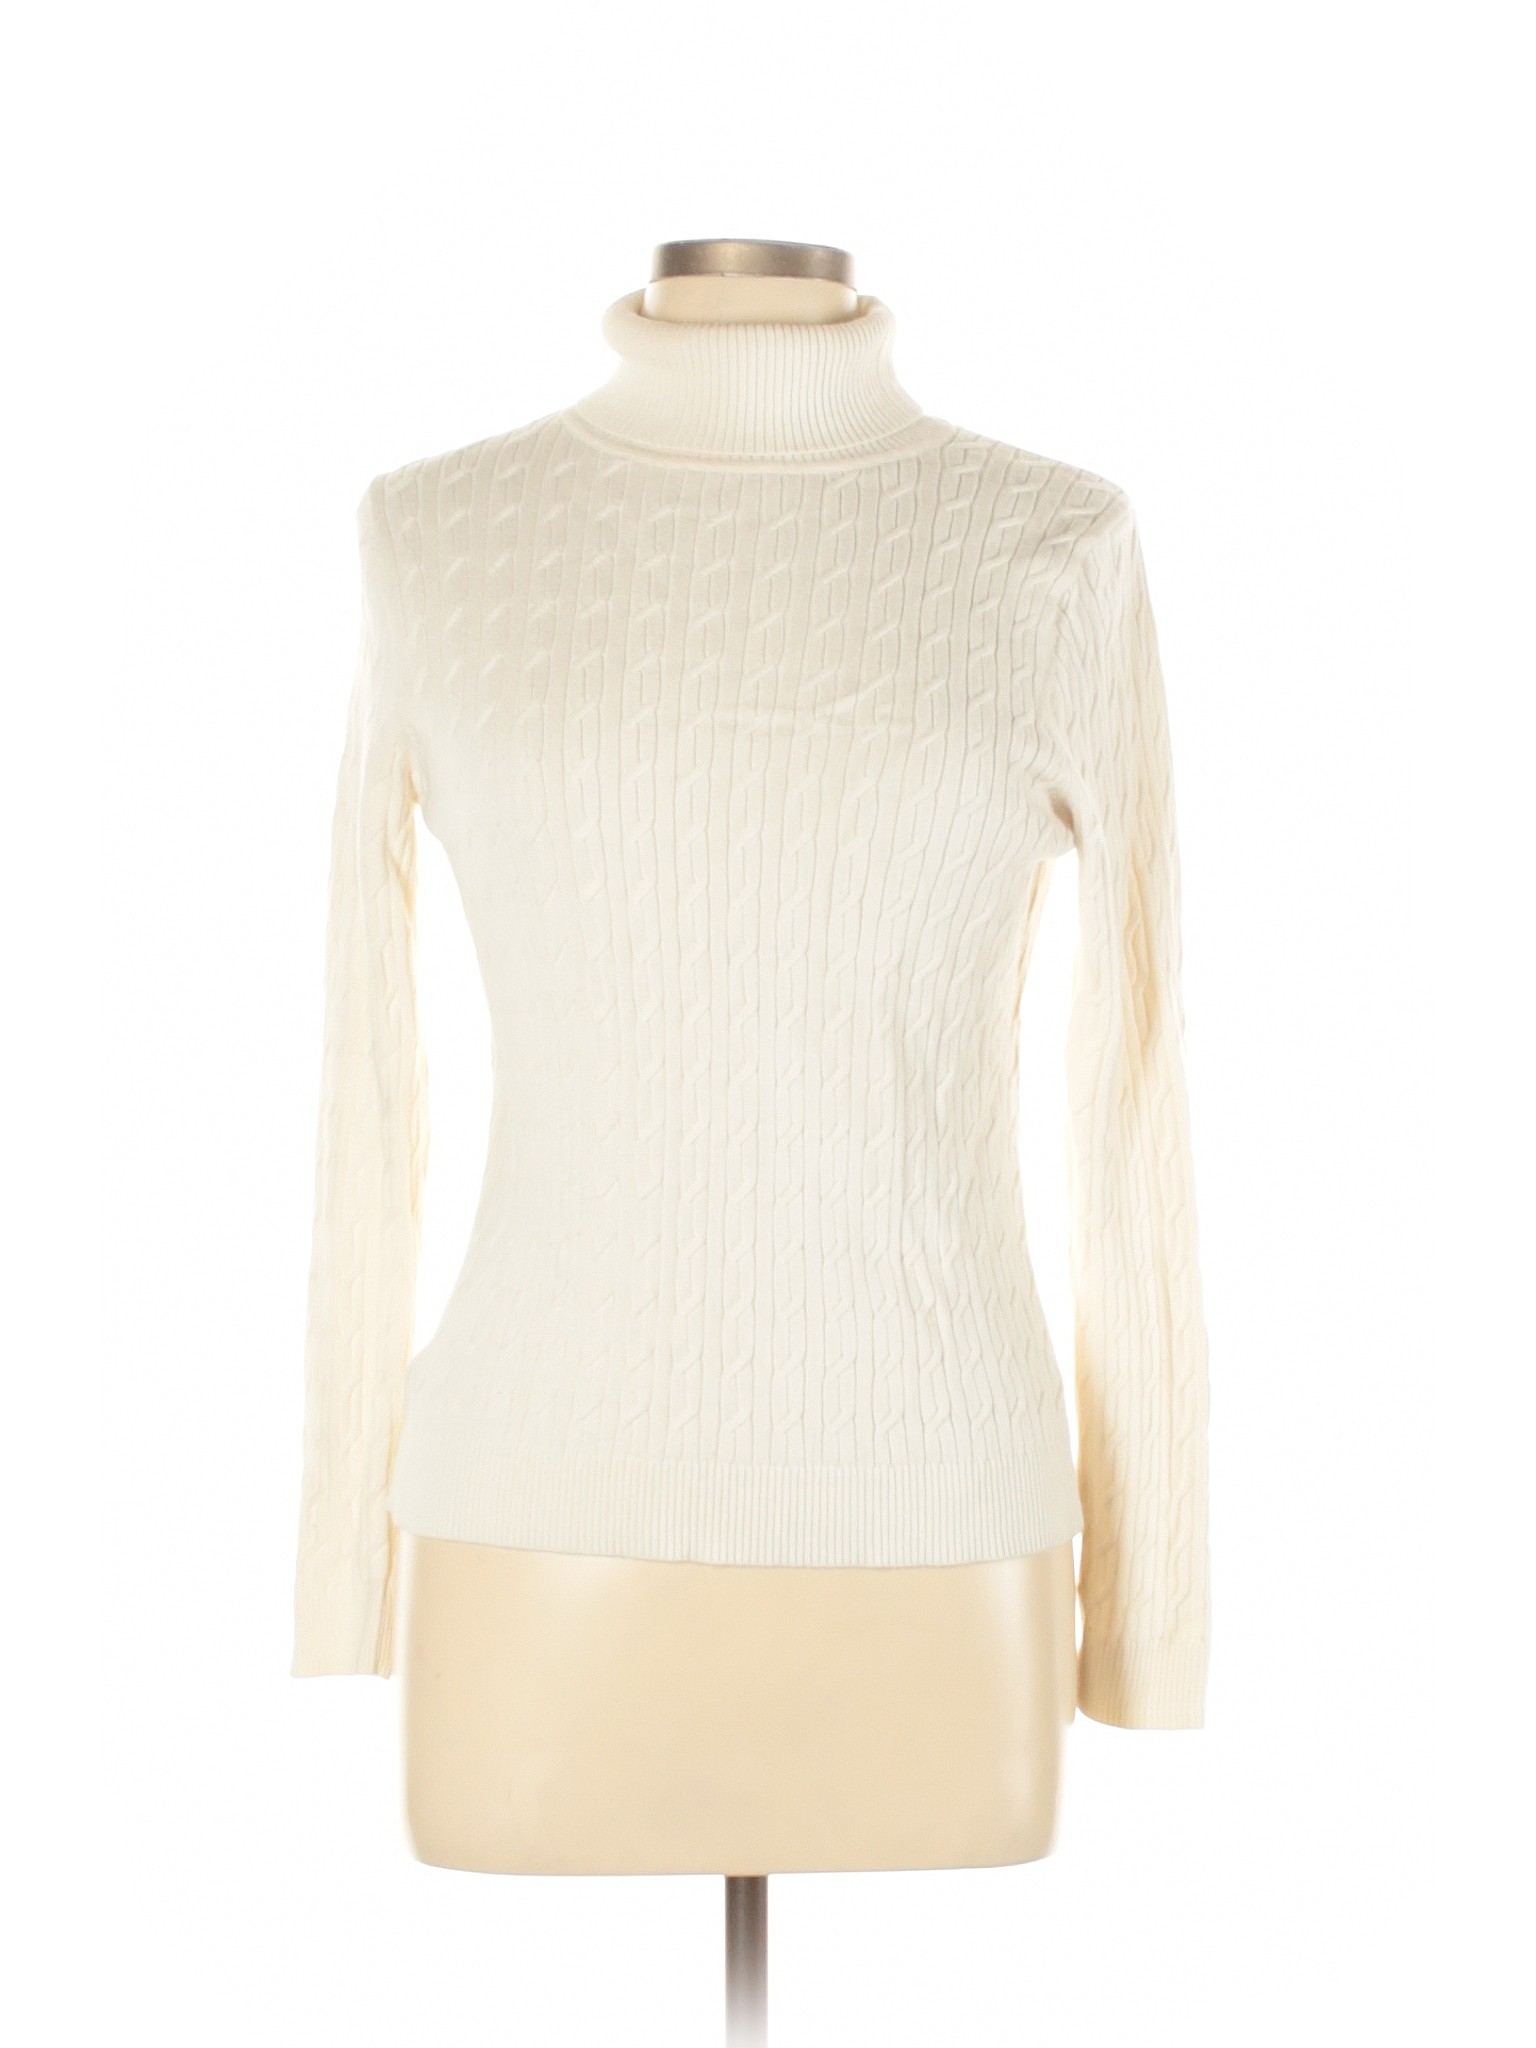 Talbots Women Ivory Turtleneck Sweater L | eBay